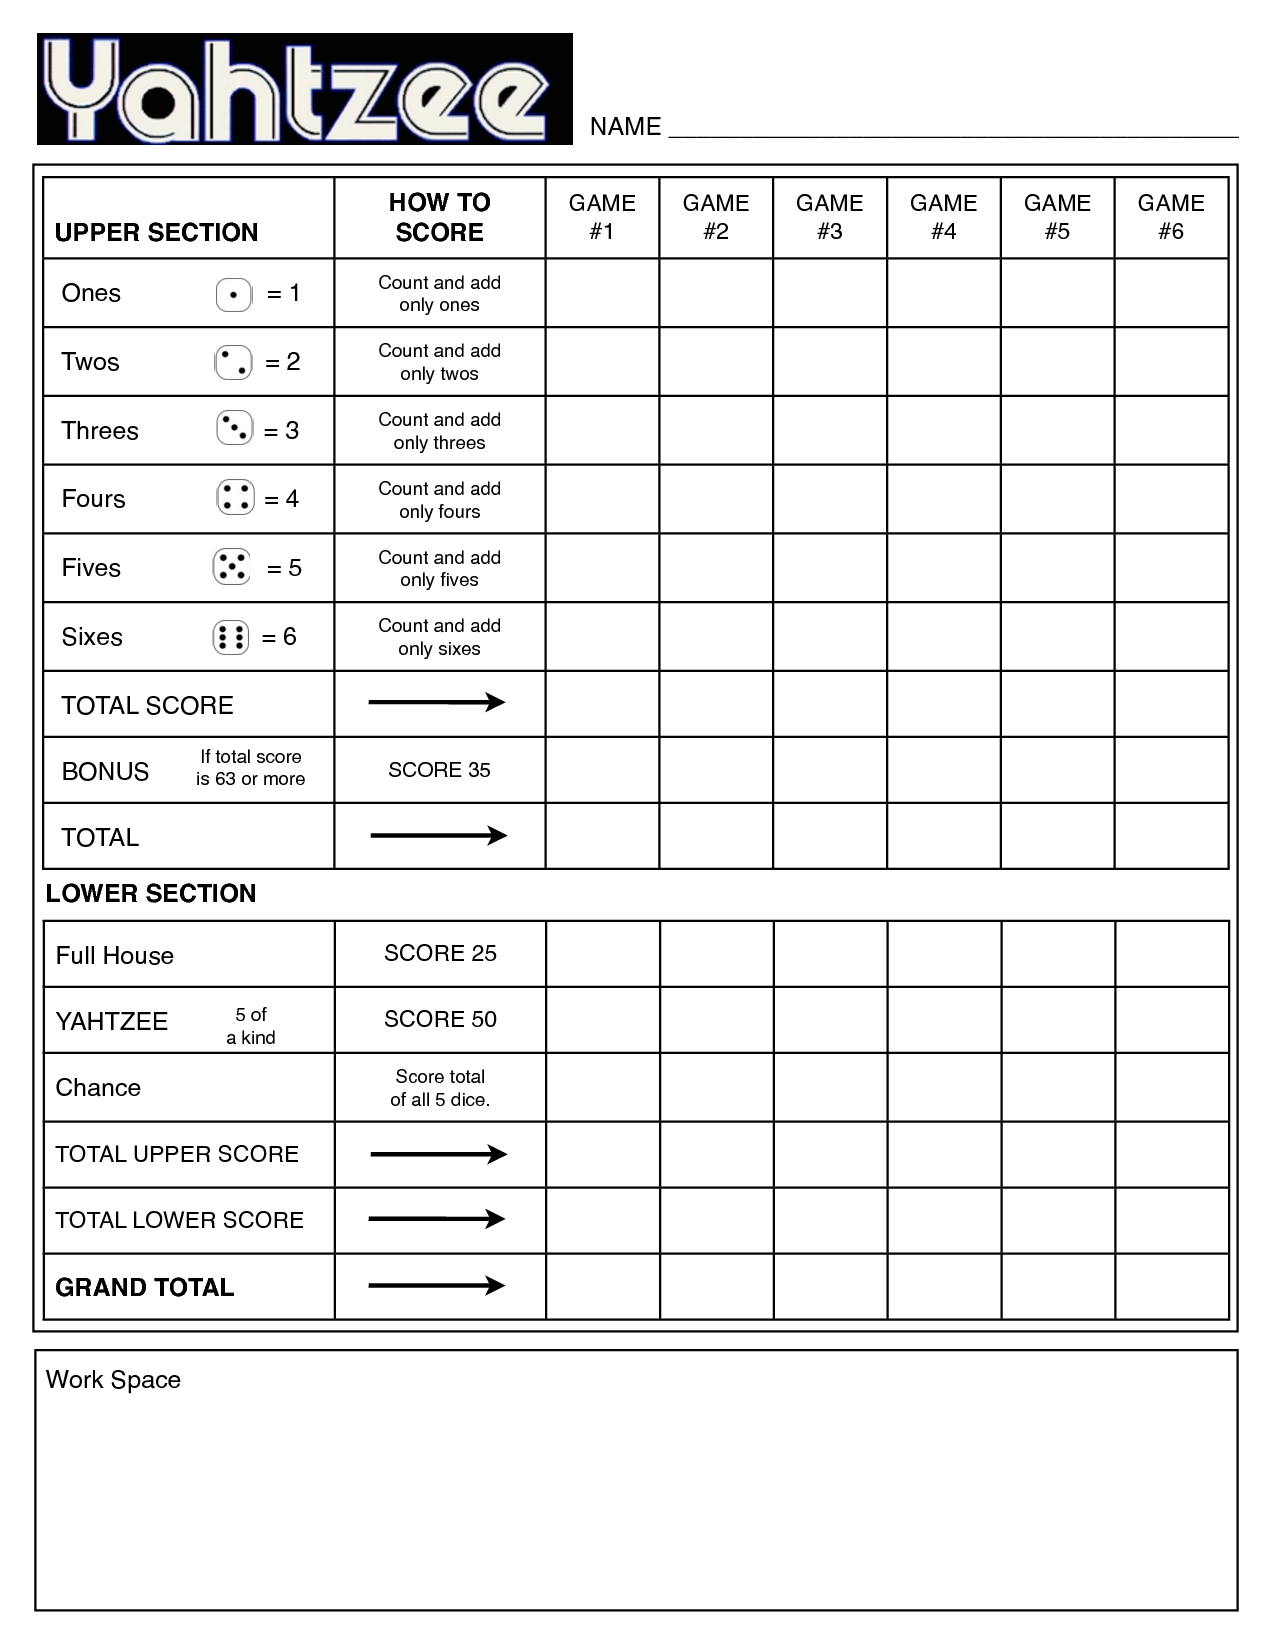 Printable Sheet Yahtzee Score Card